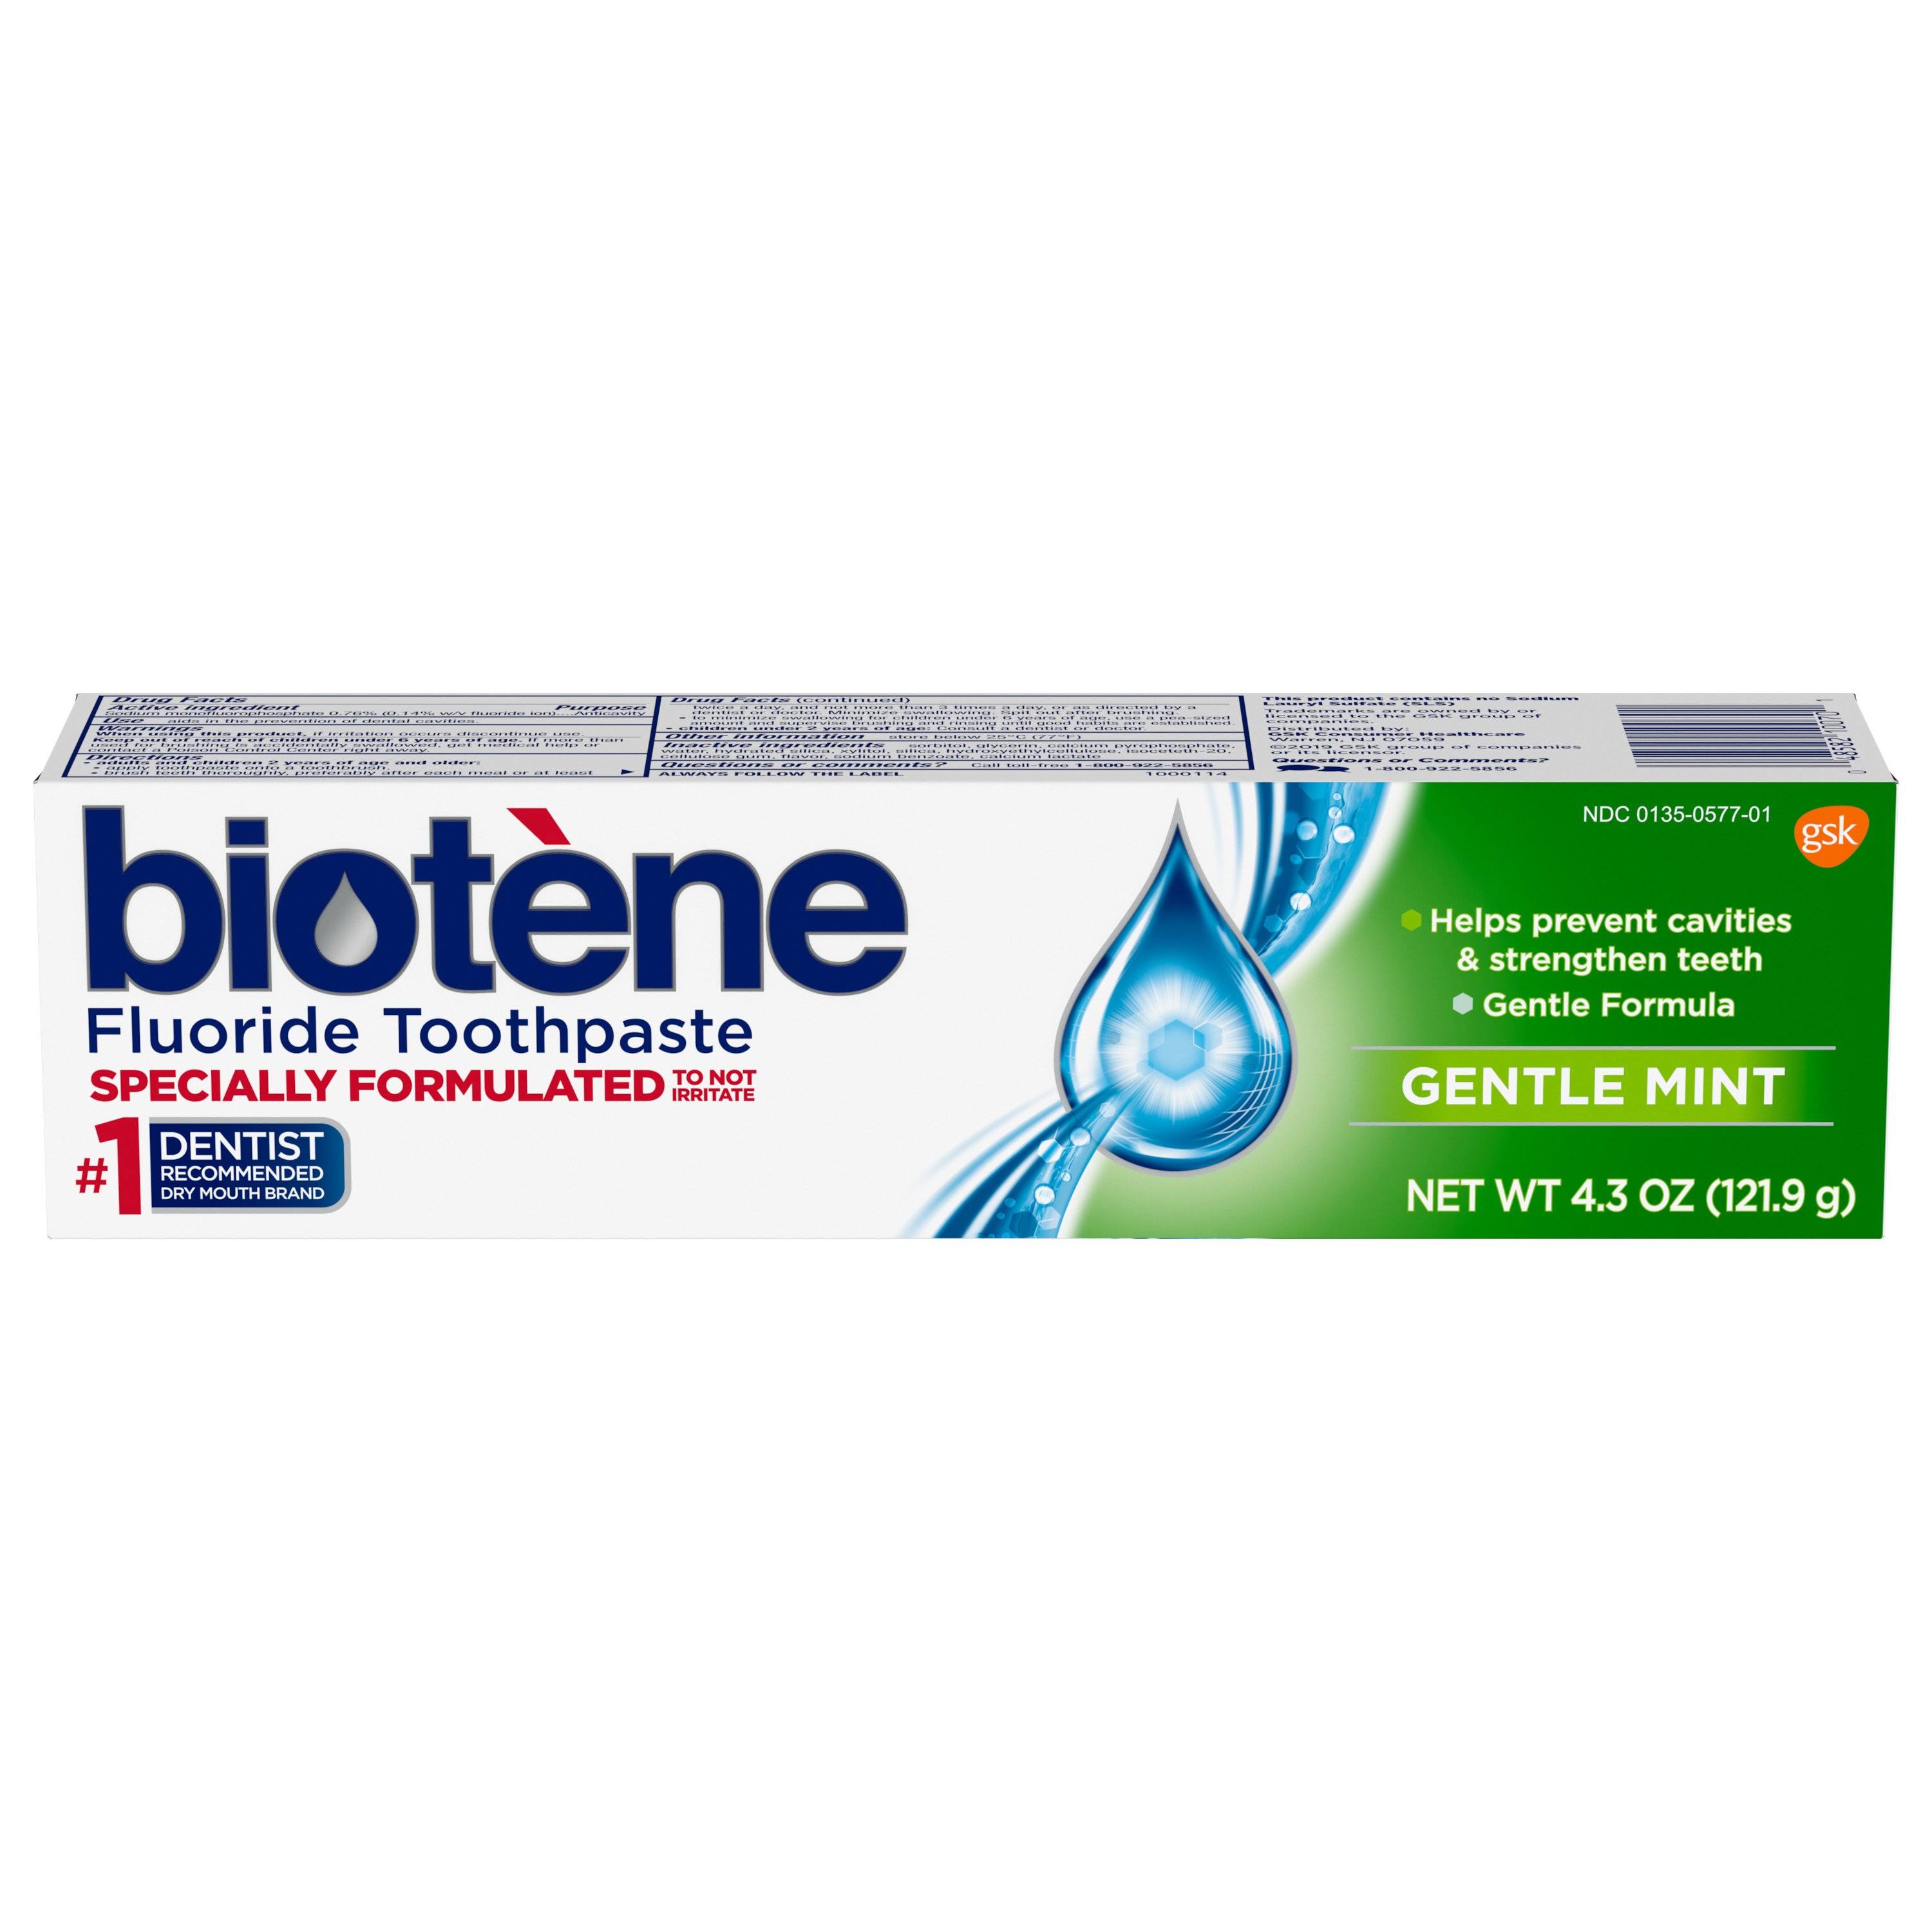 Biotène Gentle Formula Fluoride Toothpaste - 4.3oz, Gentle Mint